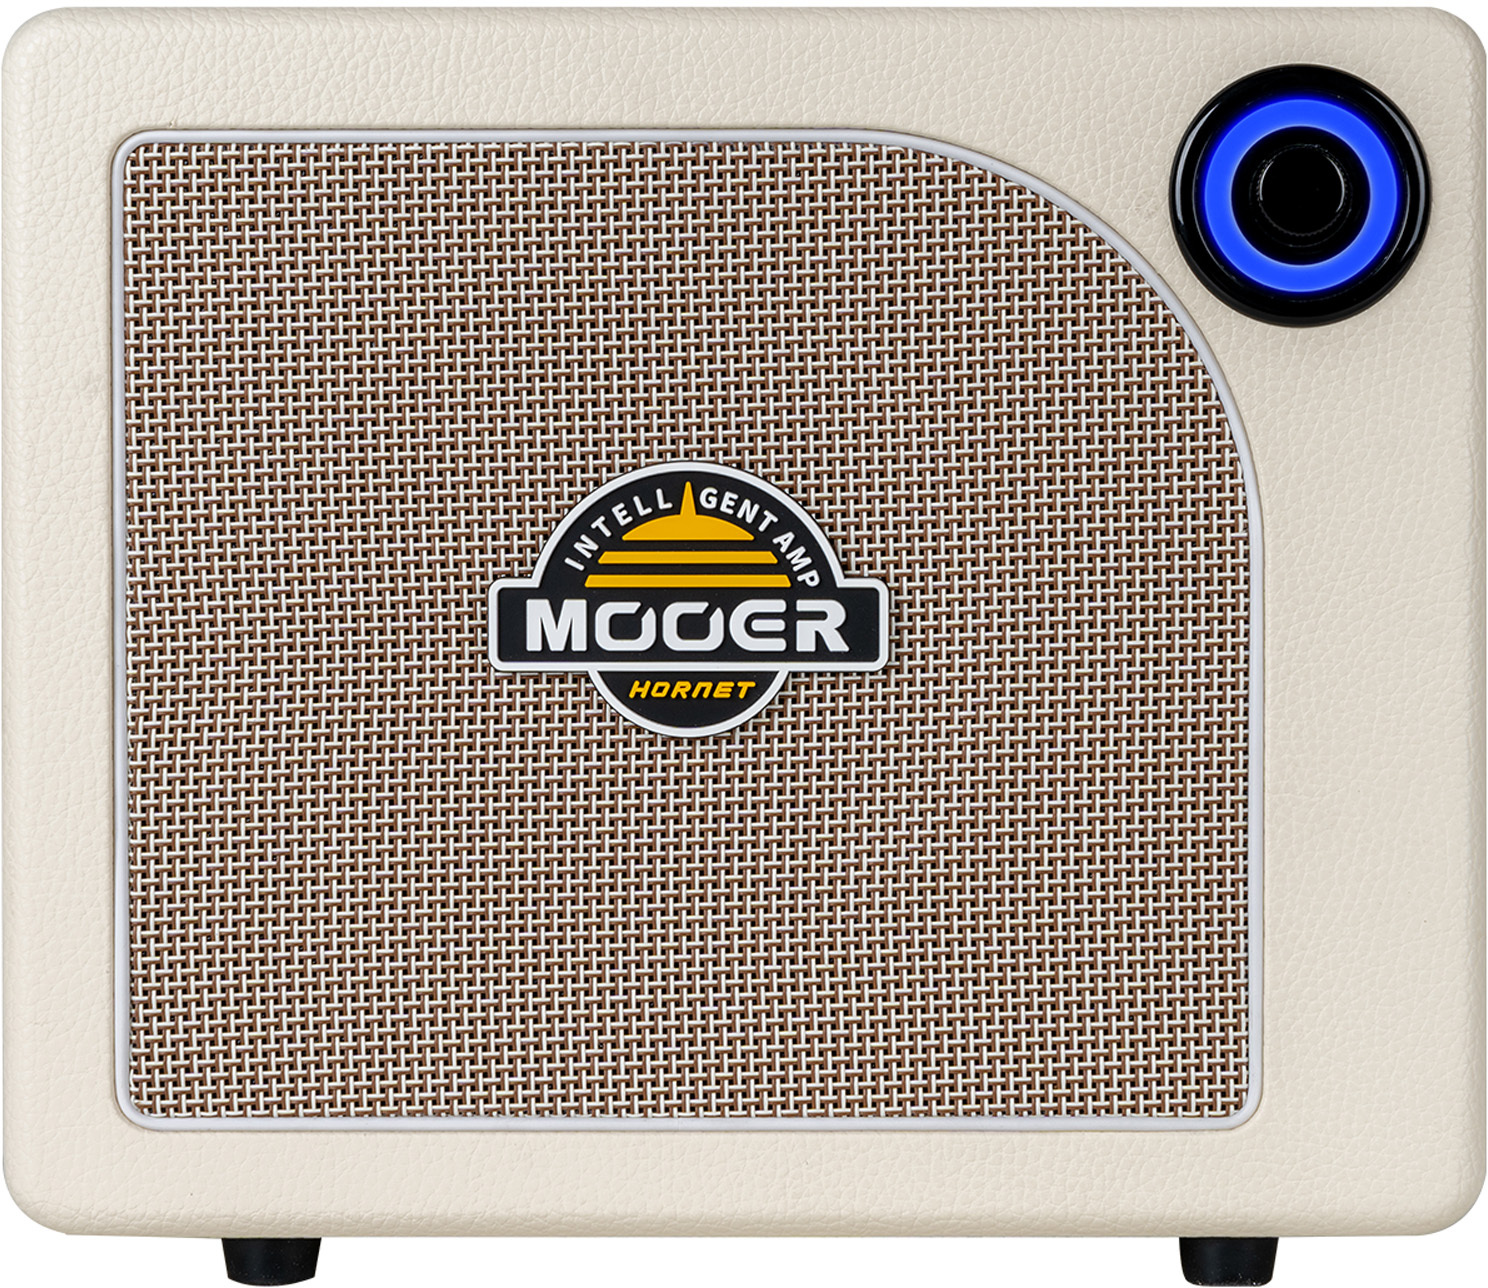 Mooer Hornet 15i Wh 15w 1x6.5 White - Combo amplificador acústico - Main picture